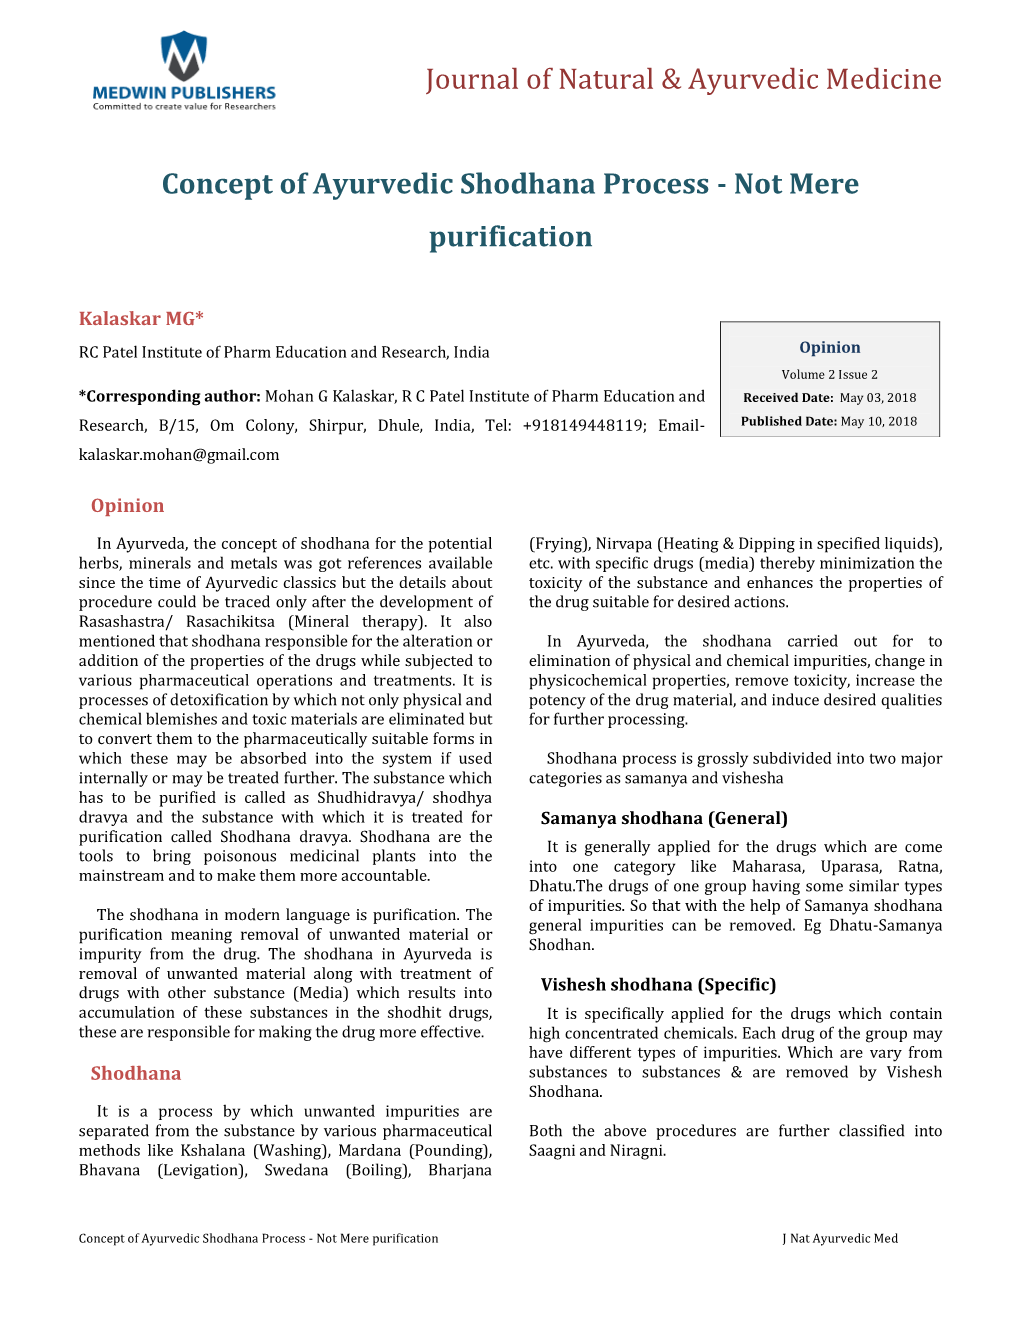 Concept of Ayurvedic Shodhana Process - Not Mere Purification